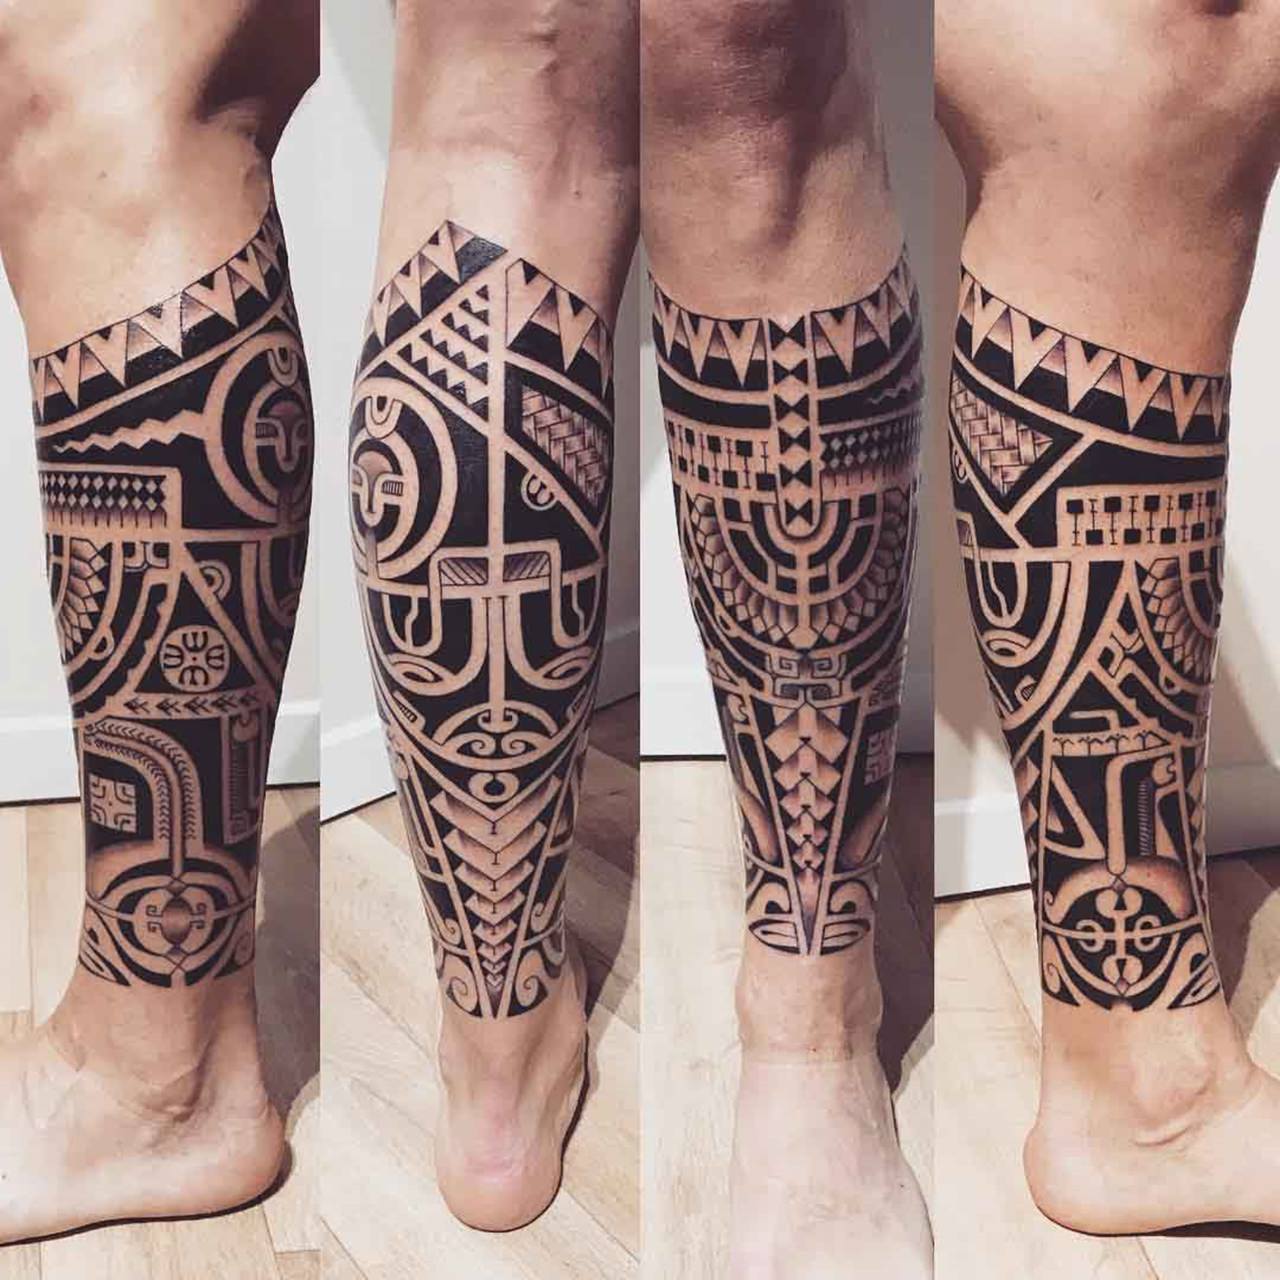 Tatuagem Maori feita na perna